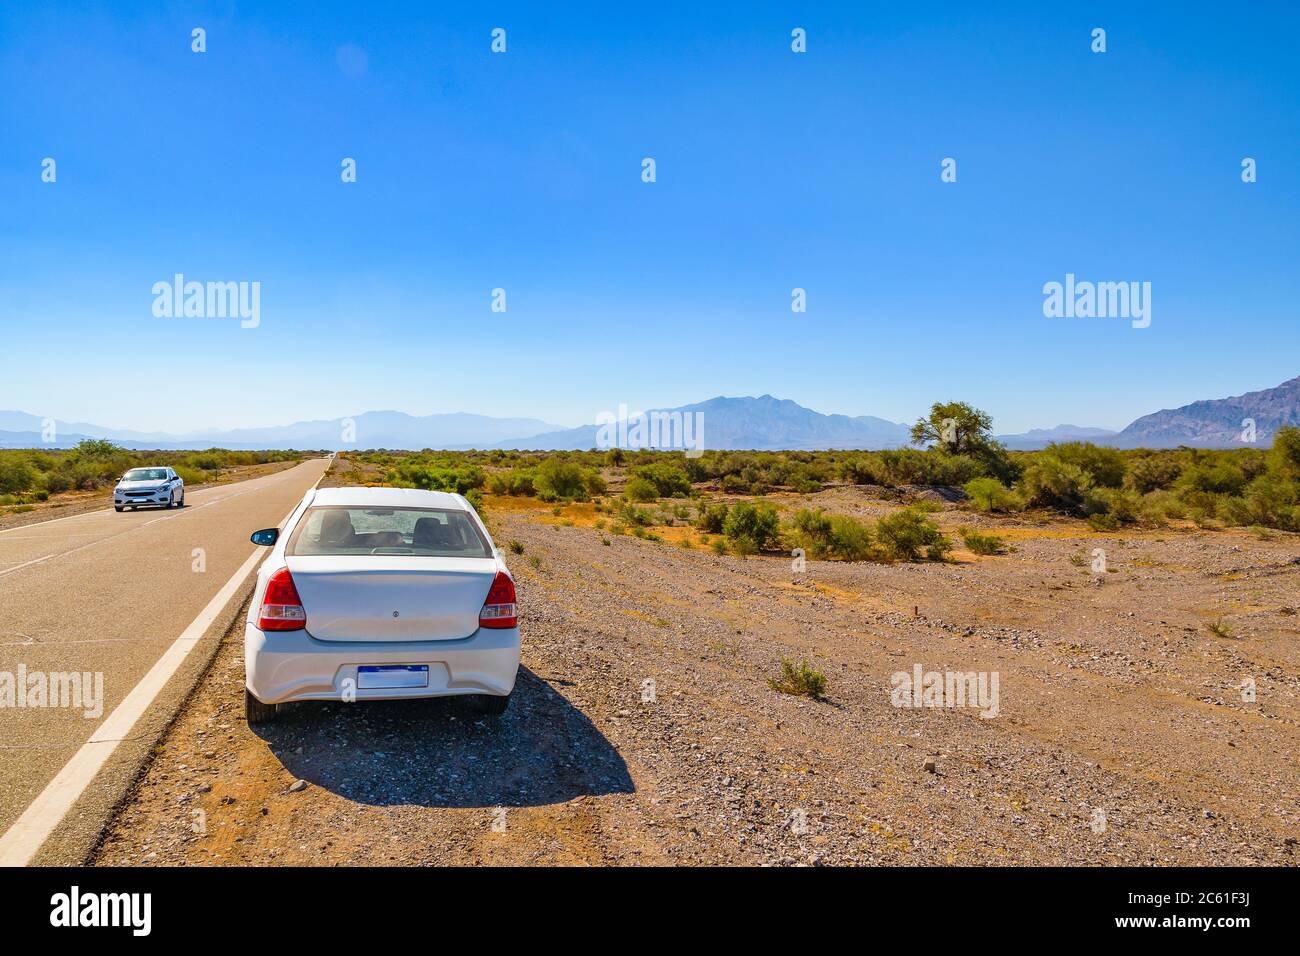 Autostrada in un ambiente aride paesaggio, provincia di san juan, argentina Foto Stock